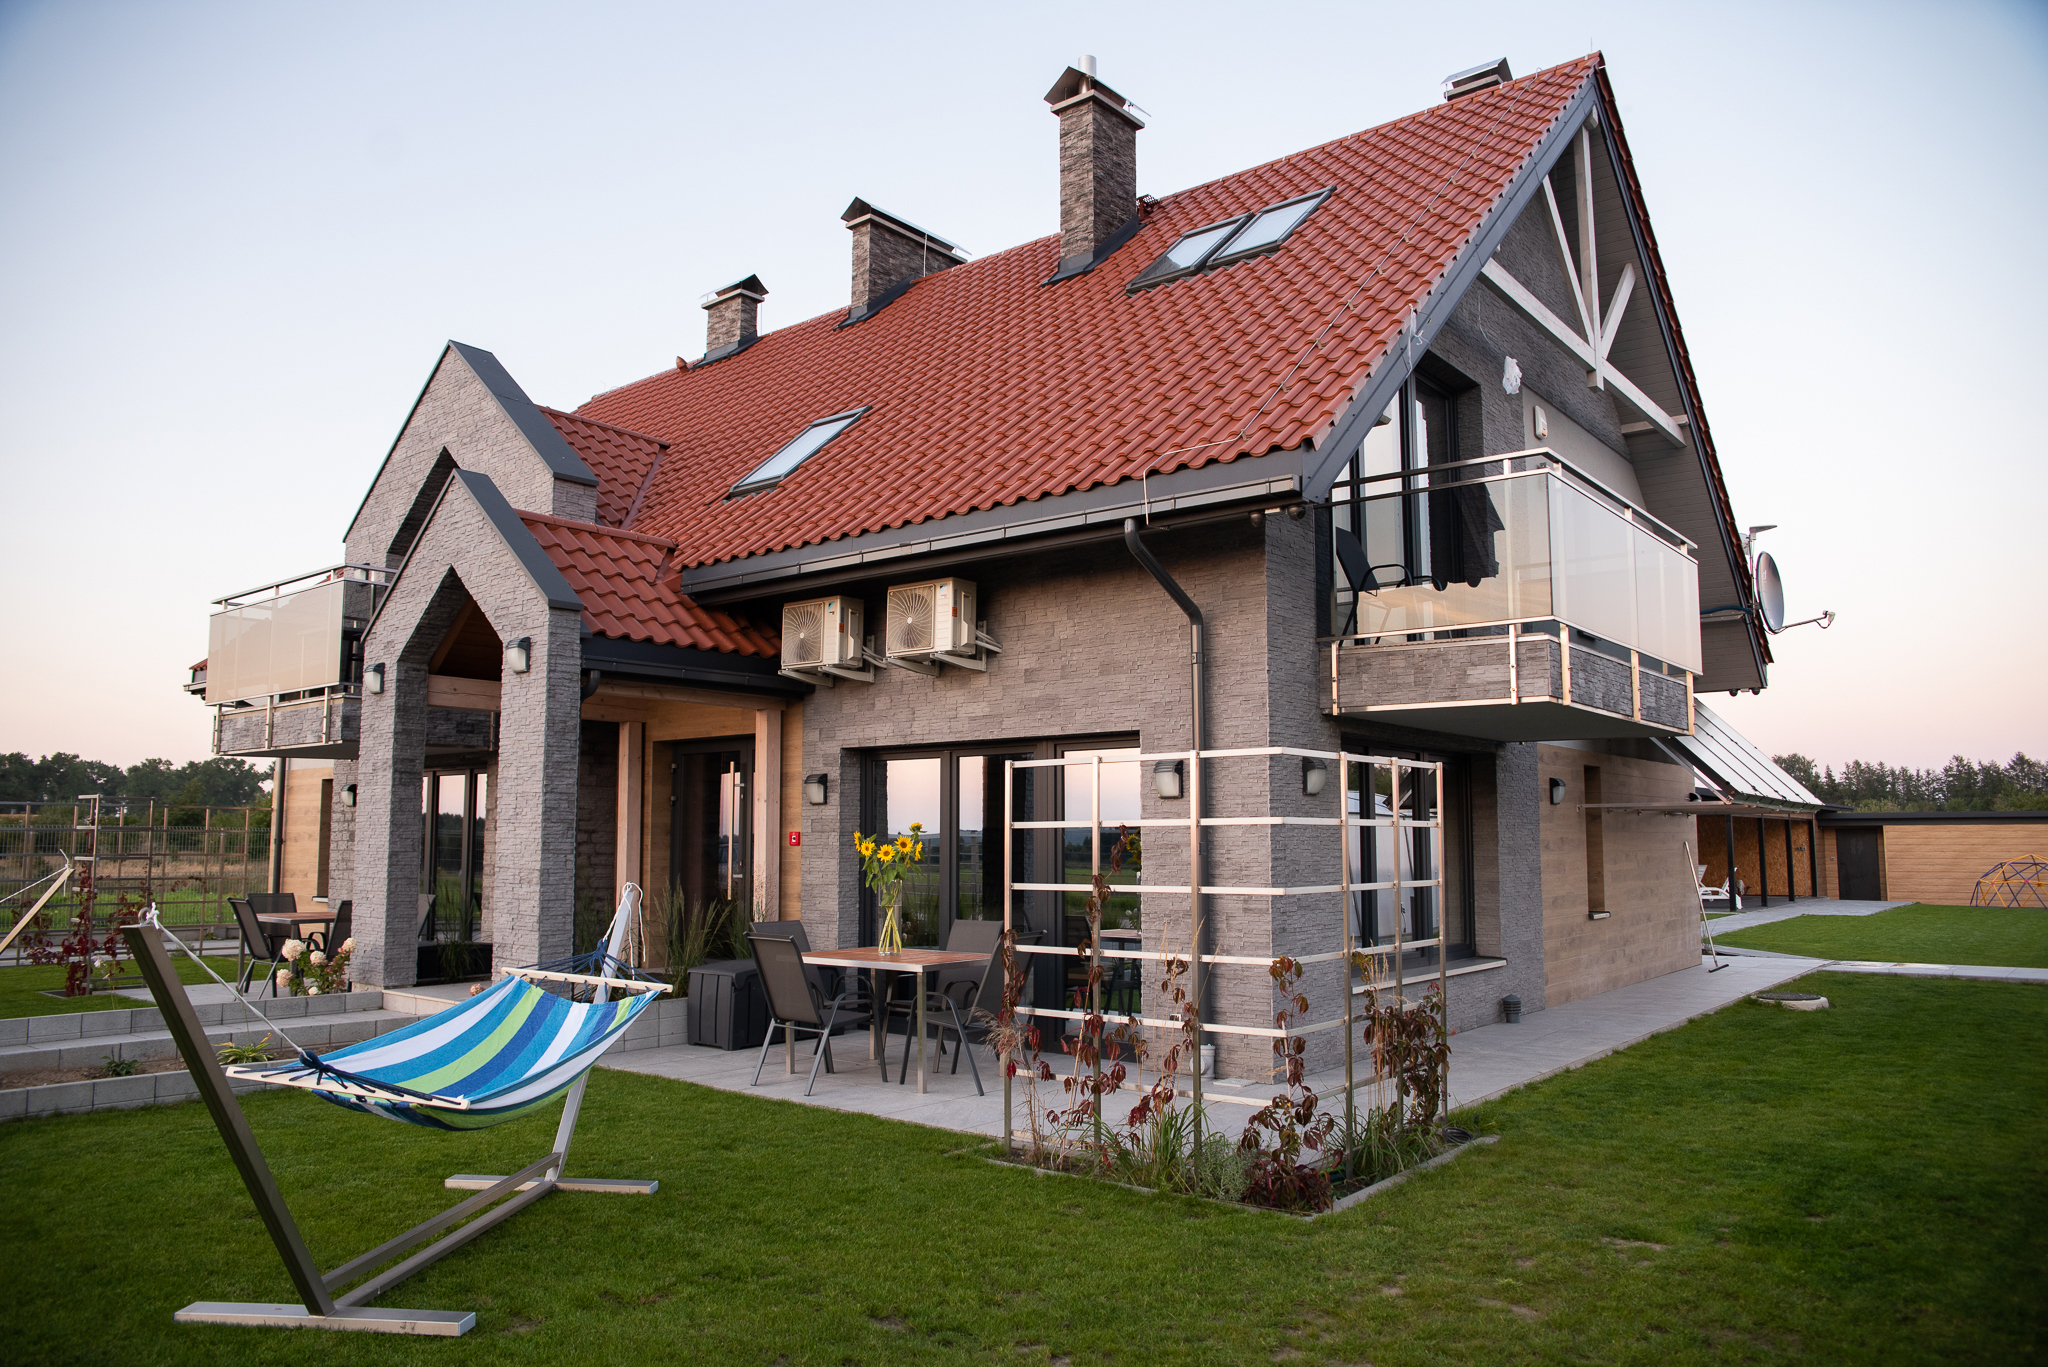 Mazurski Rejs apartments — home and garden accessories